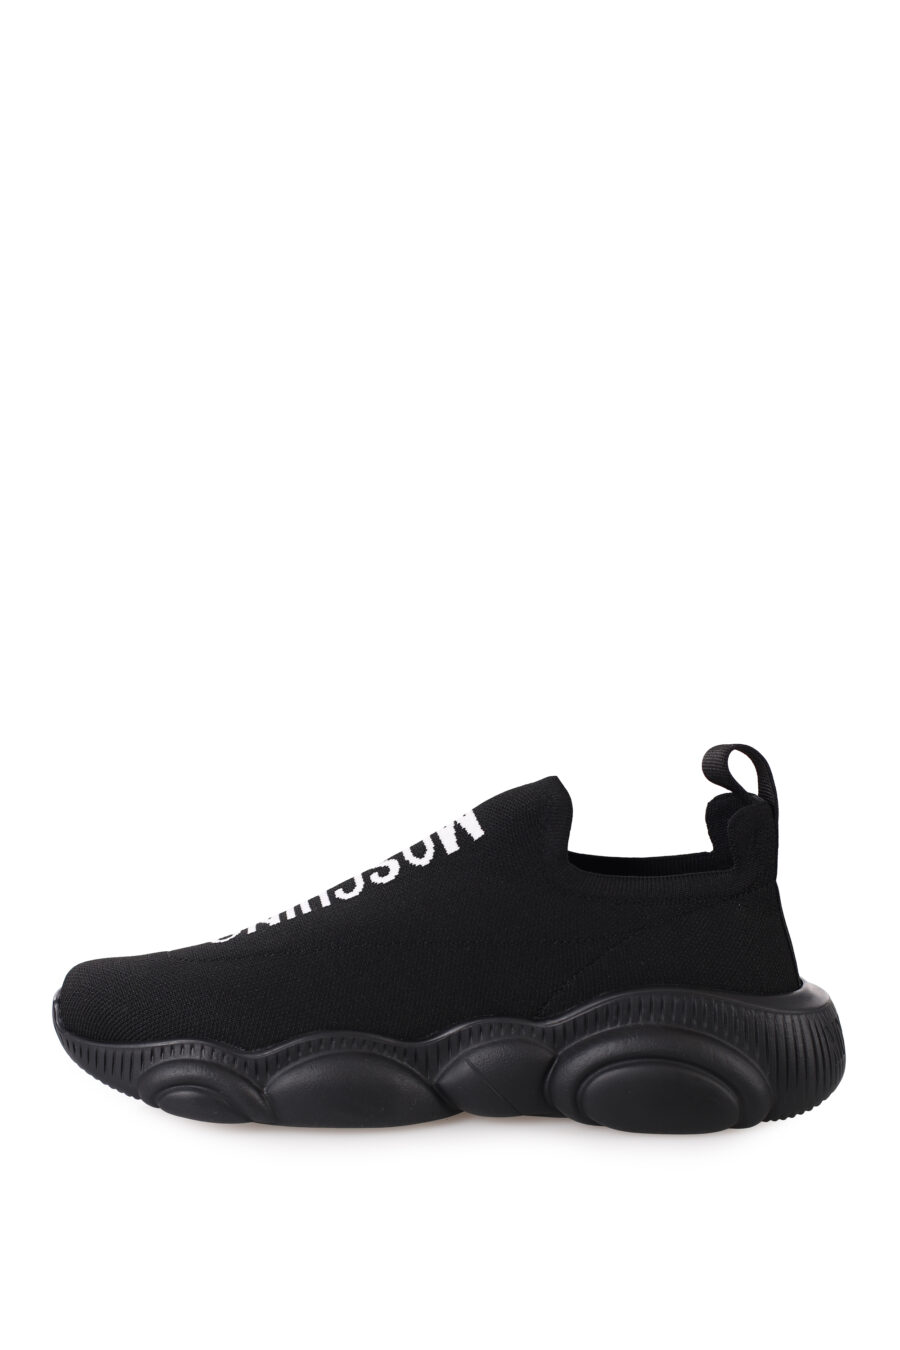 Zapatillas elásticas negras con logo blanco - IMG 0360